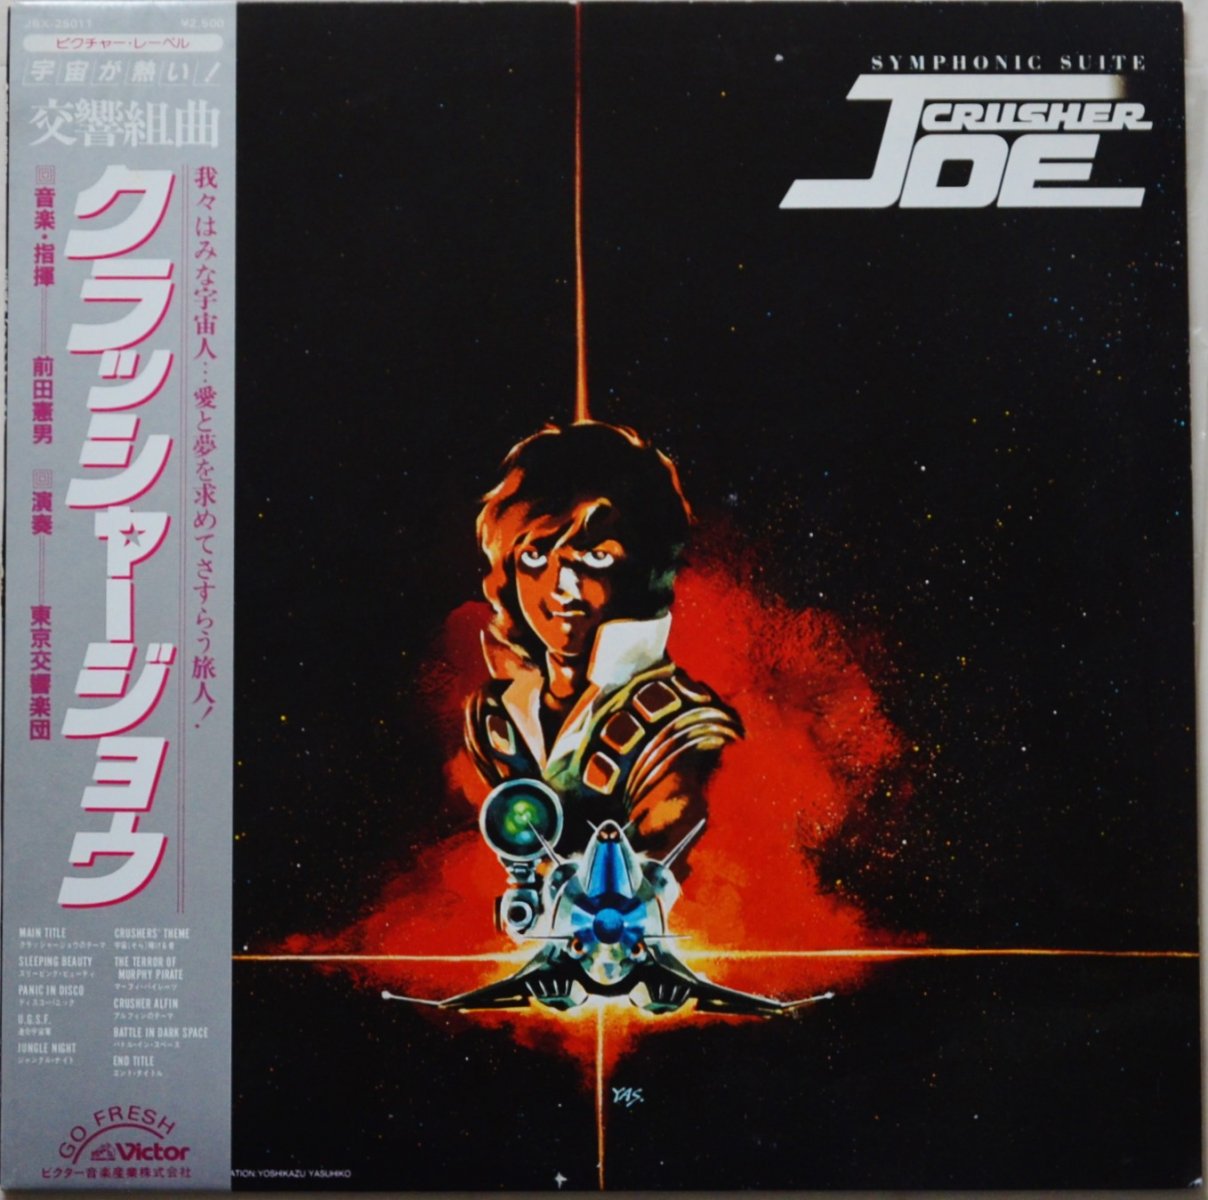 O.S.T.(前田憲男 / NORIO MAEDA) / SYMPHONIC SUITE CRUSHER JOE = 交響組曲 クラッシャージョウ (LP)